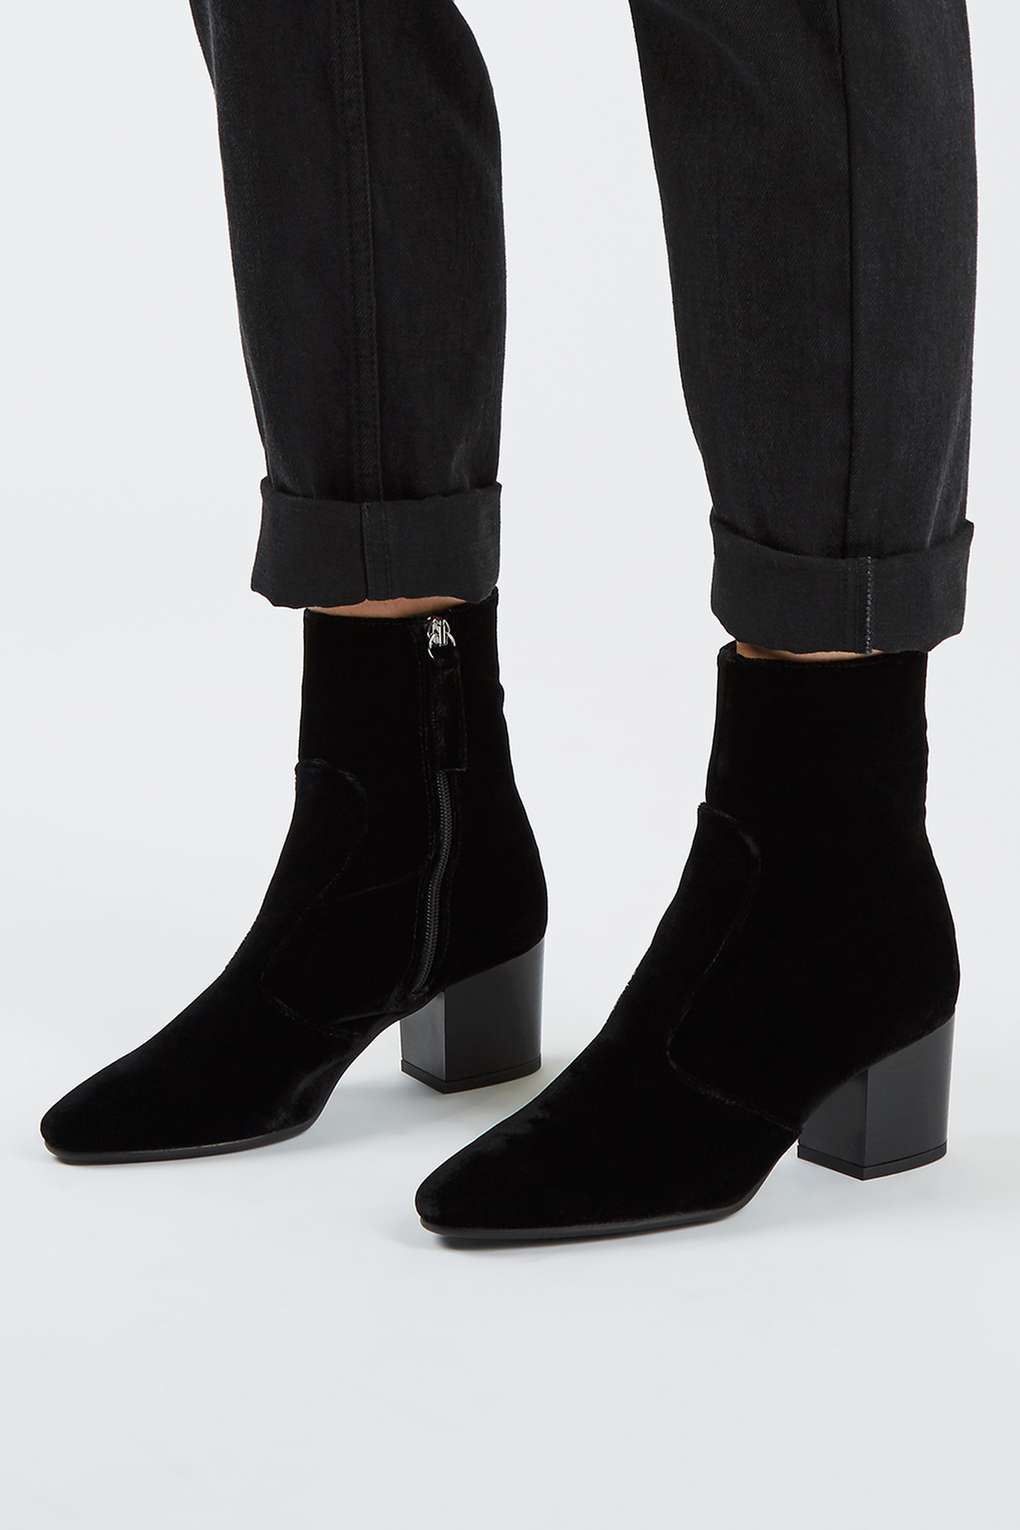 #TuesdayShoesday: Shop Our Favorite Velvet Boots